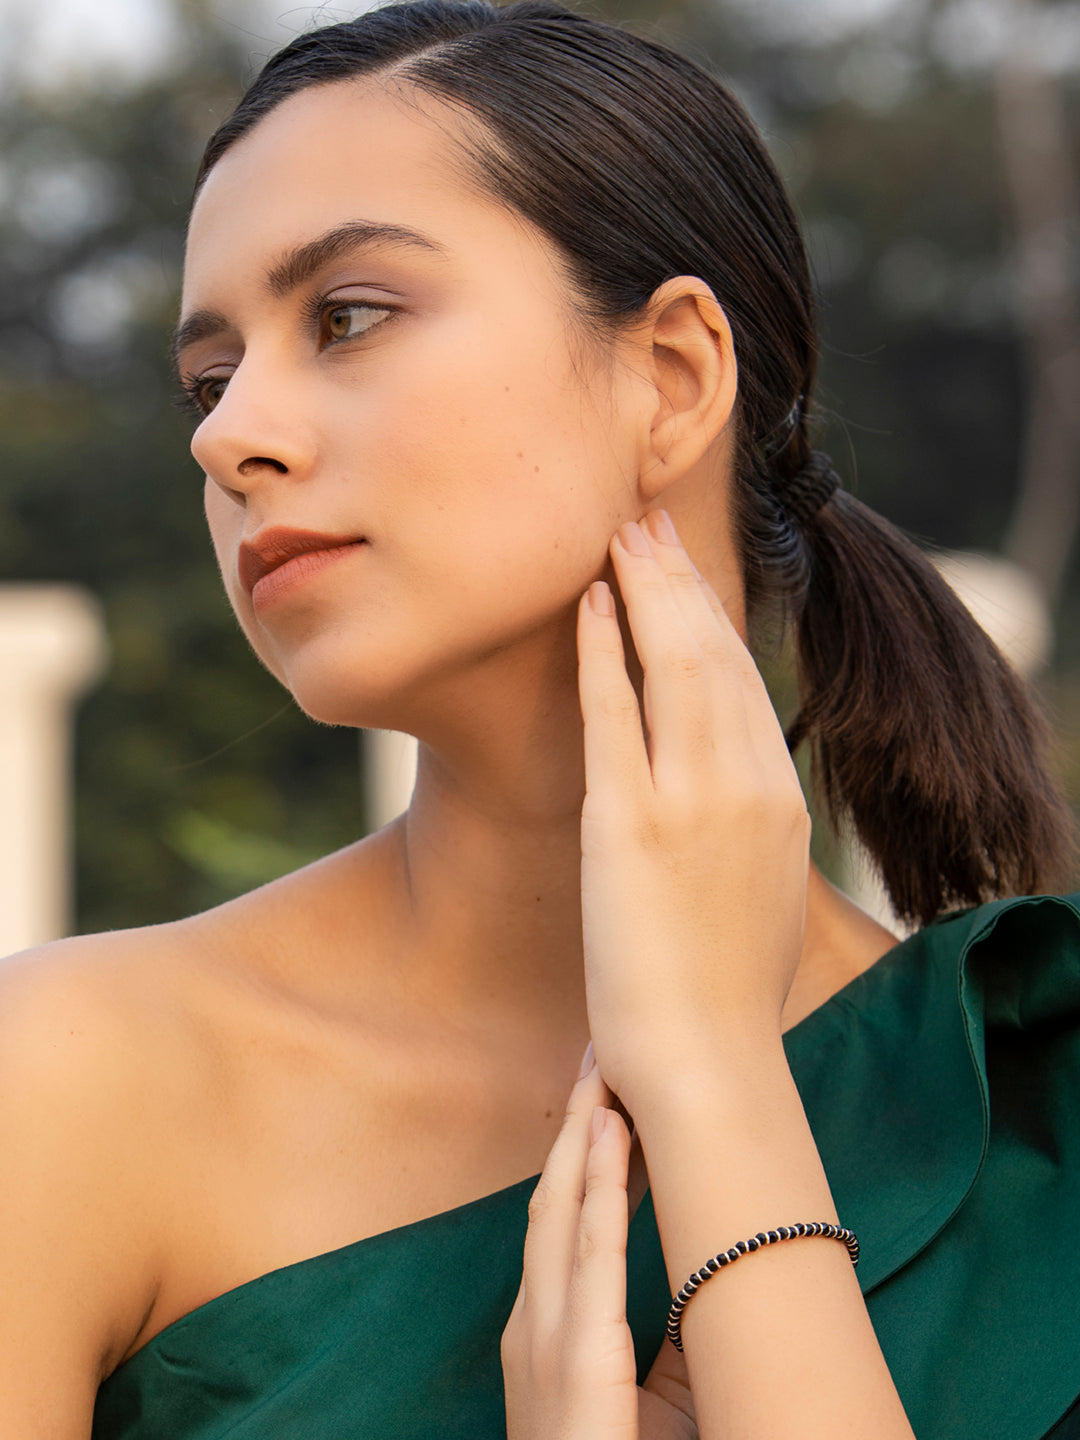 Buy Priyaasi Elegant American Diamond/AD Bracelet for Women | Fashionable &  Trendy | Kada Style Leaf Design Girls Bracelet | Rose Gold Bracelet with  Interlock Closure | Onesize - 2.6 at Amazon.in